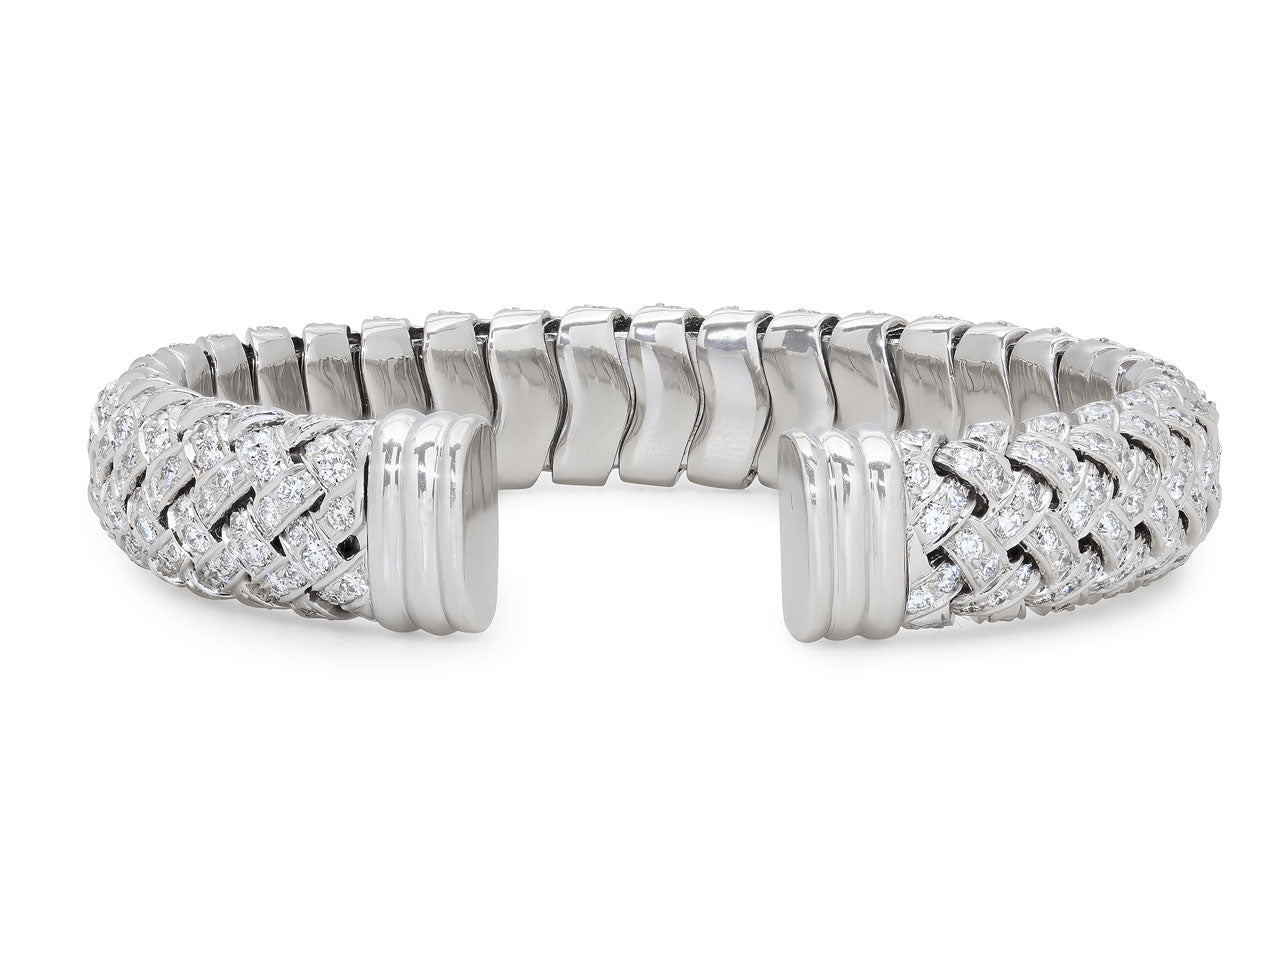 Tiffany & Co. 'Vannerie' Cuff Bracelet in Platinum